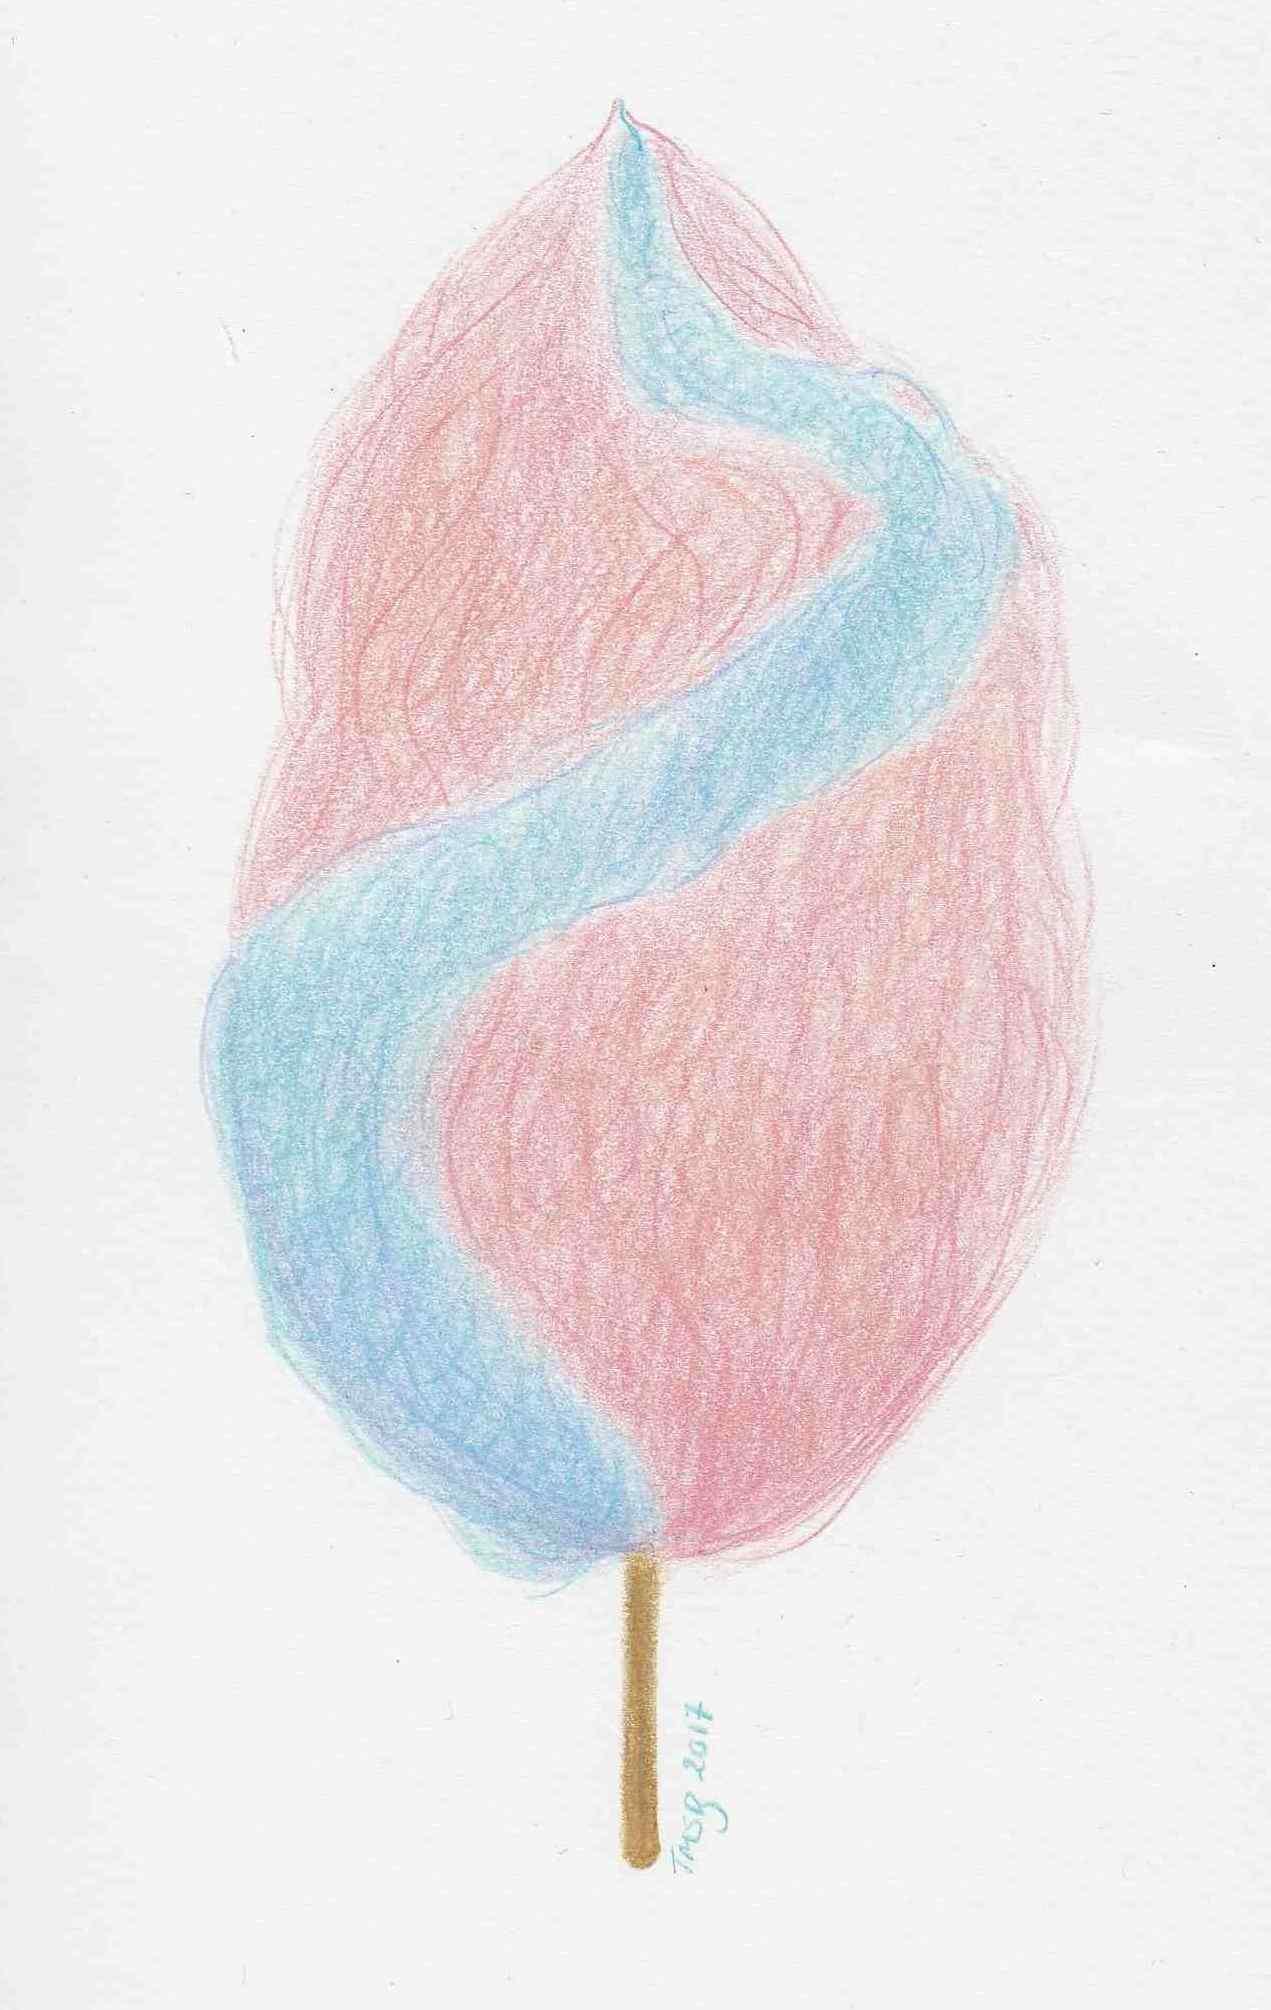 Candy floss, by Marija Smits